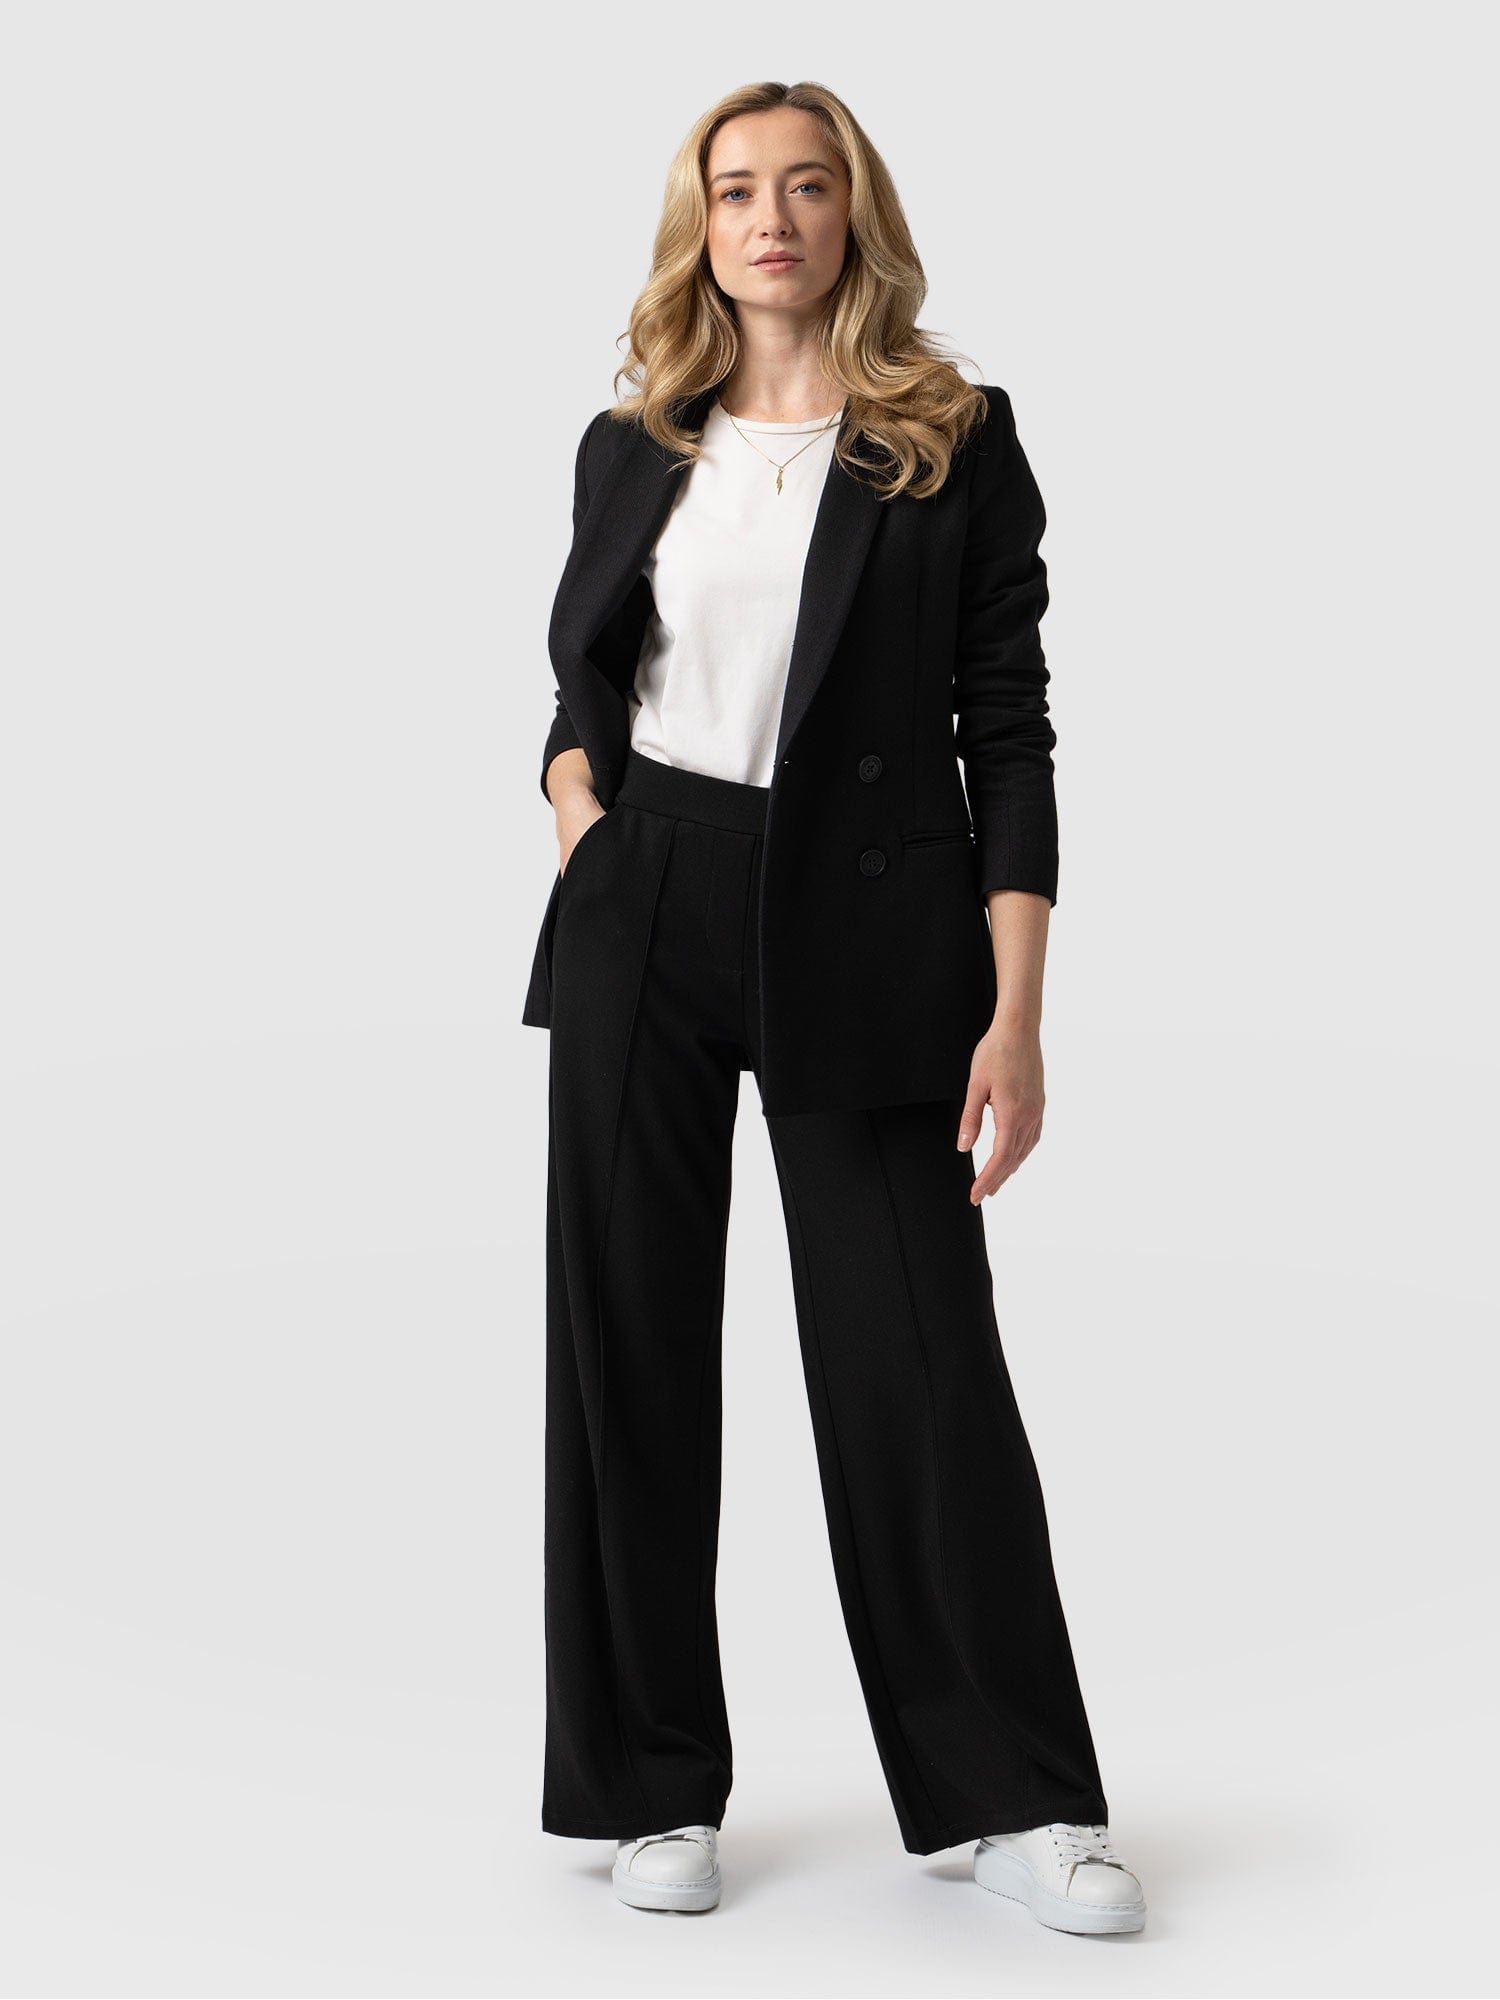 Rachael Trouser Suit Outfit |